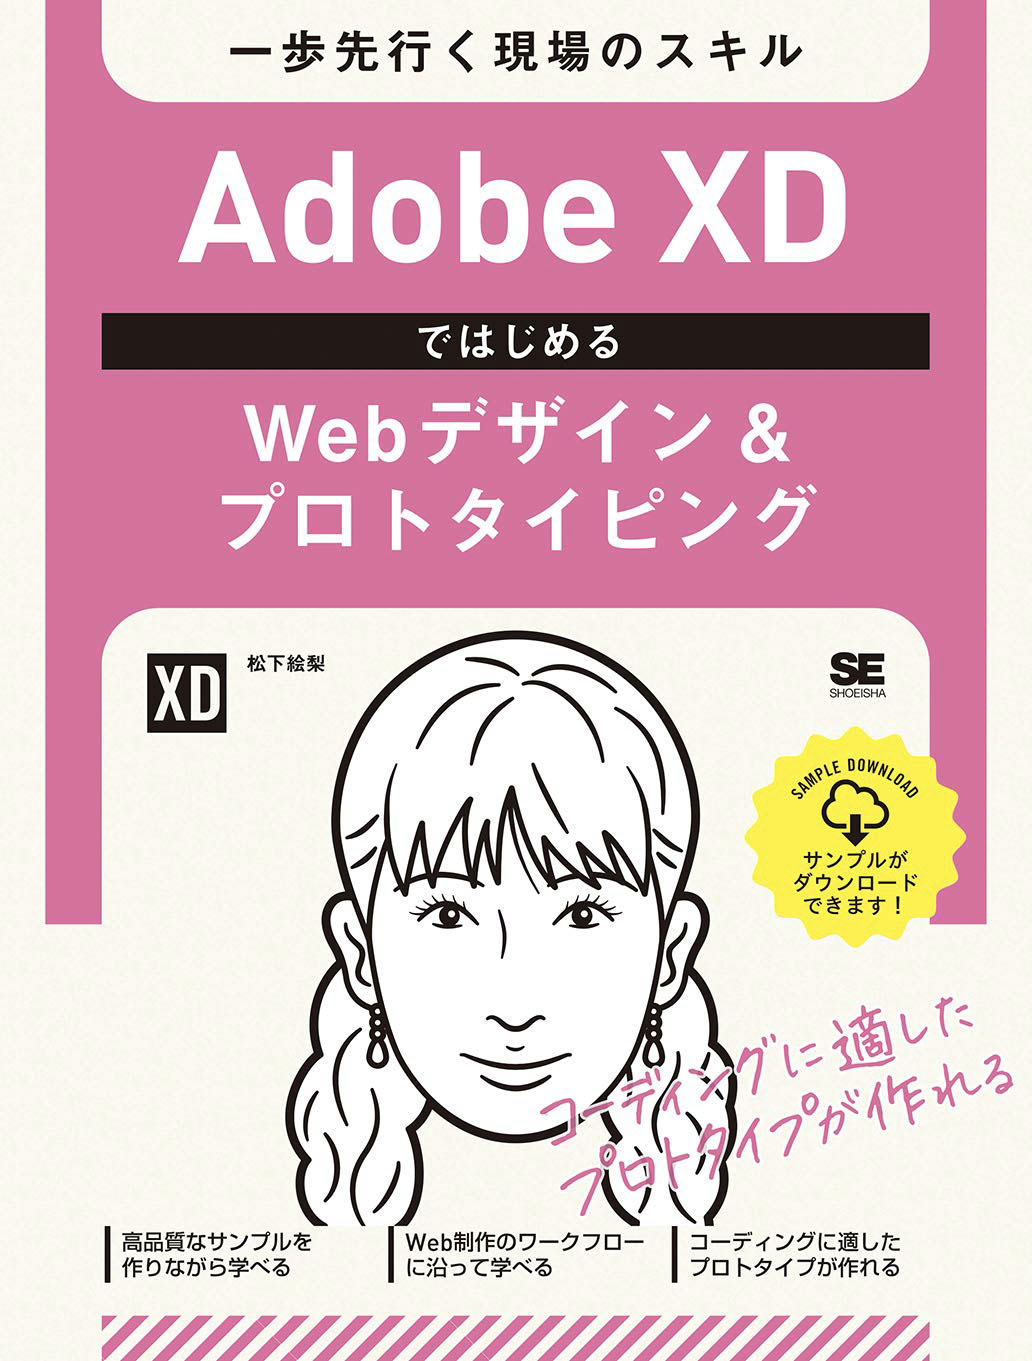 Adobe XDではじめるWebデザイン&プロトタイピング 一歩先行く現場のスキル